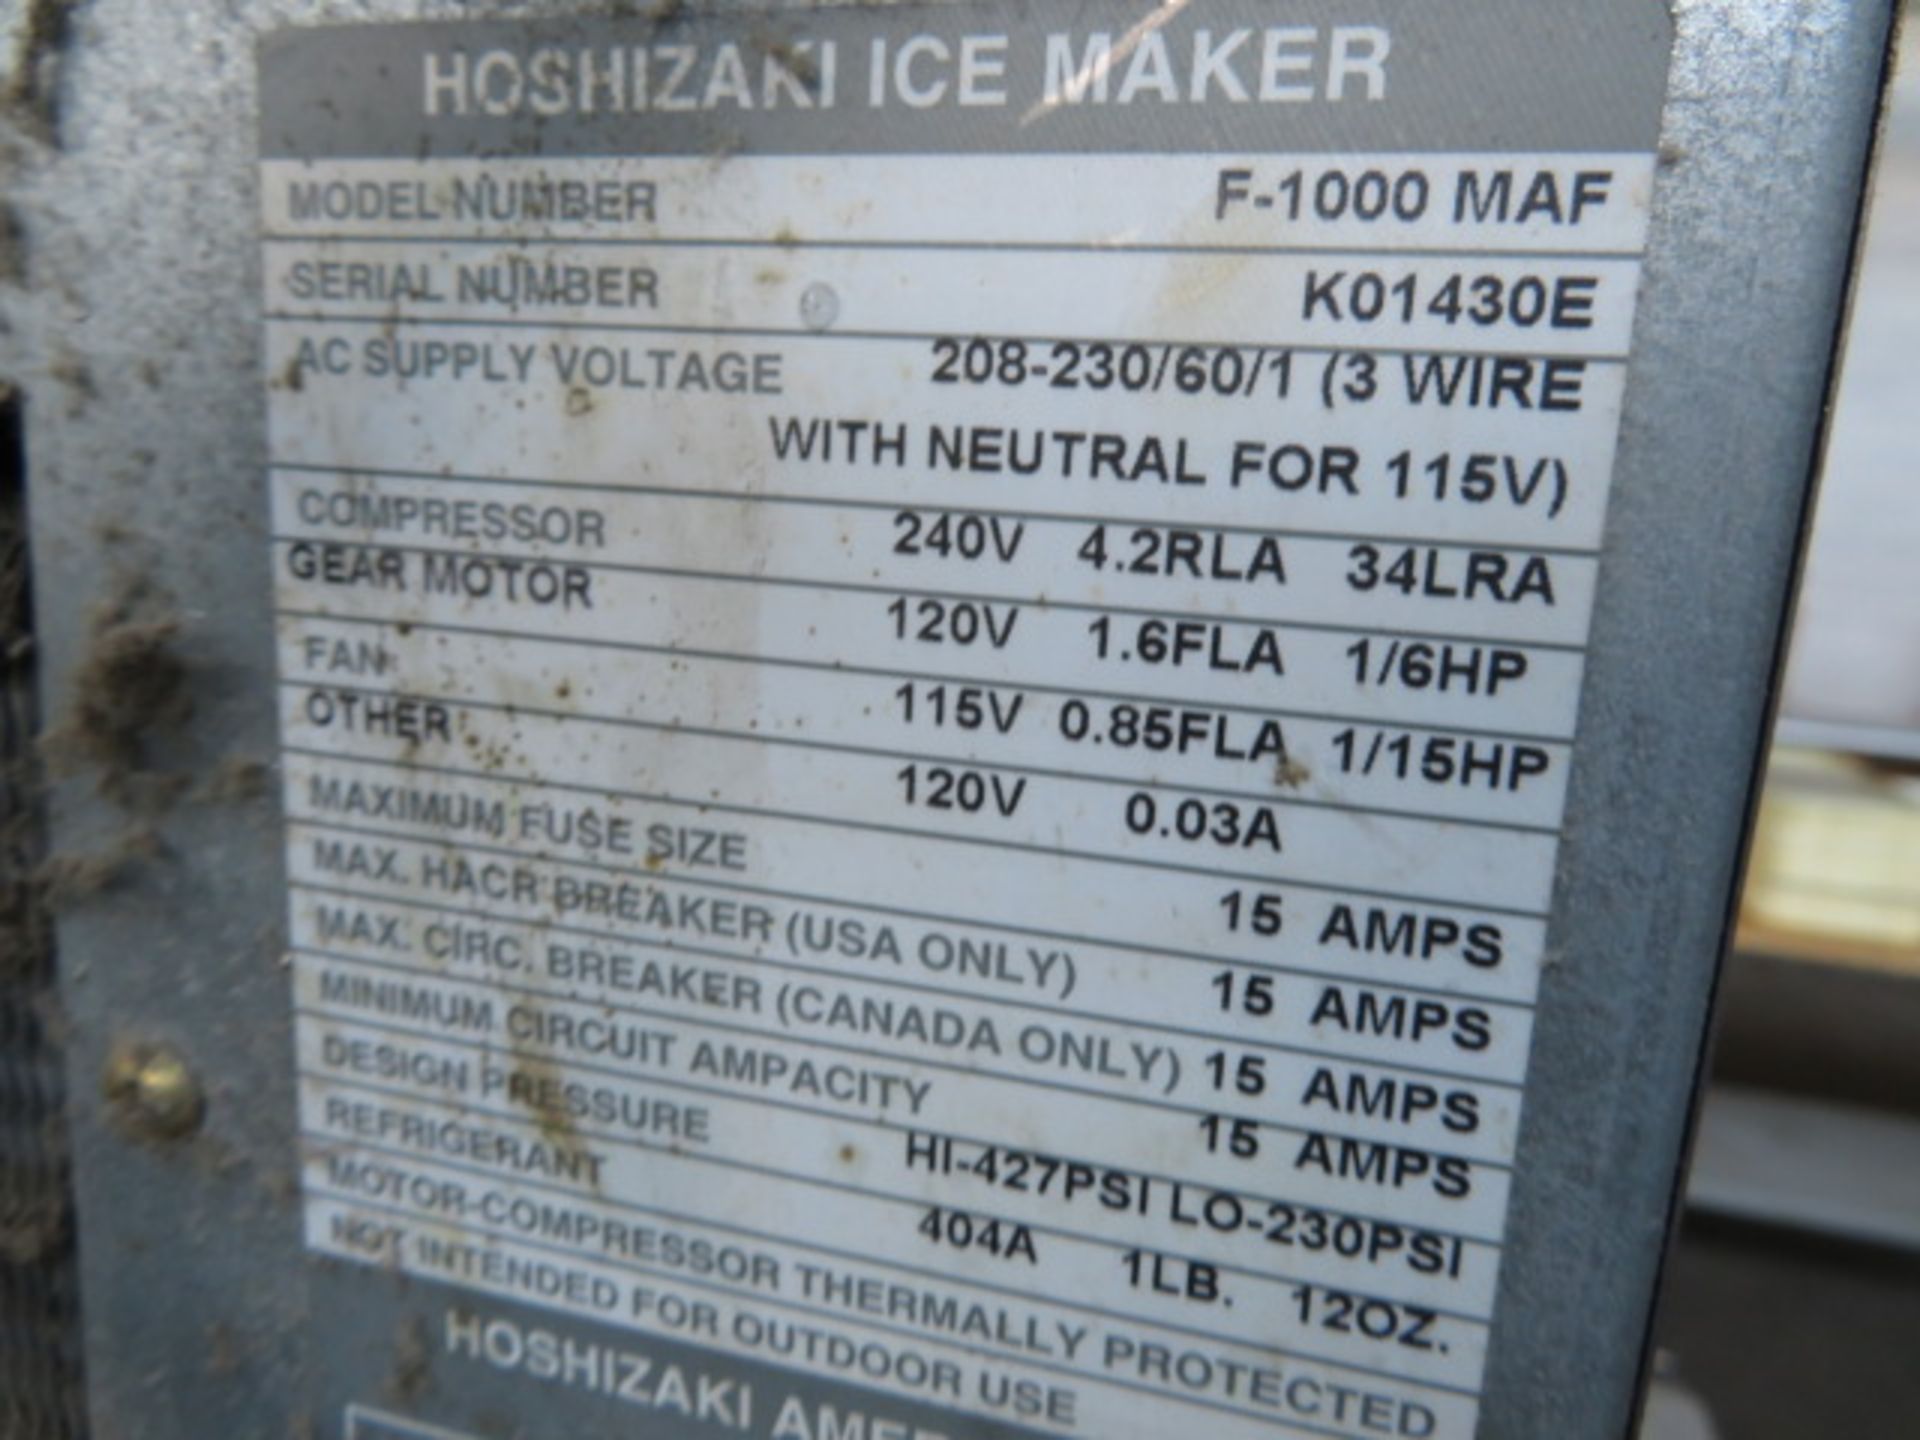 HOSHIZAKI F-1000 MAF ICE MAKER, AIR COOLED (Located - Phila.,PA) - Image 2 of 3